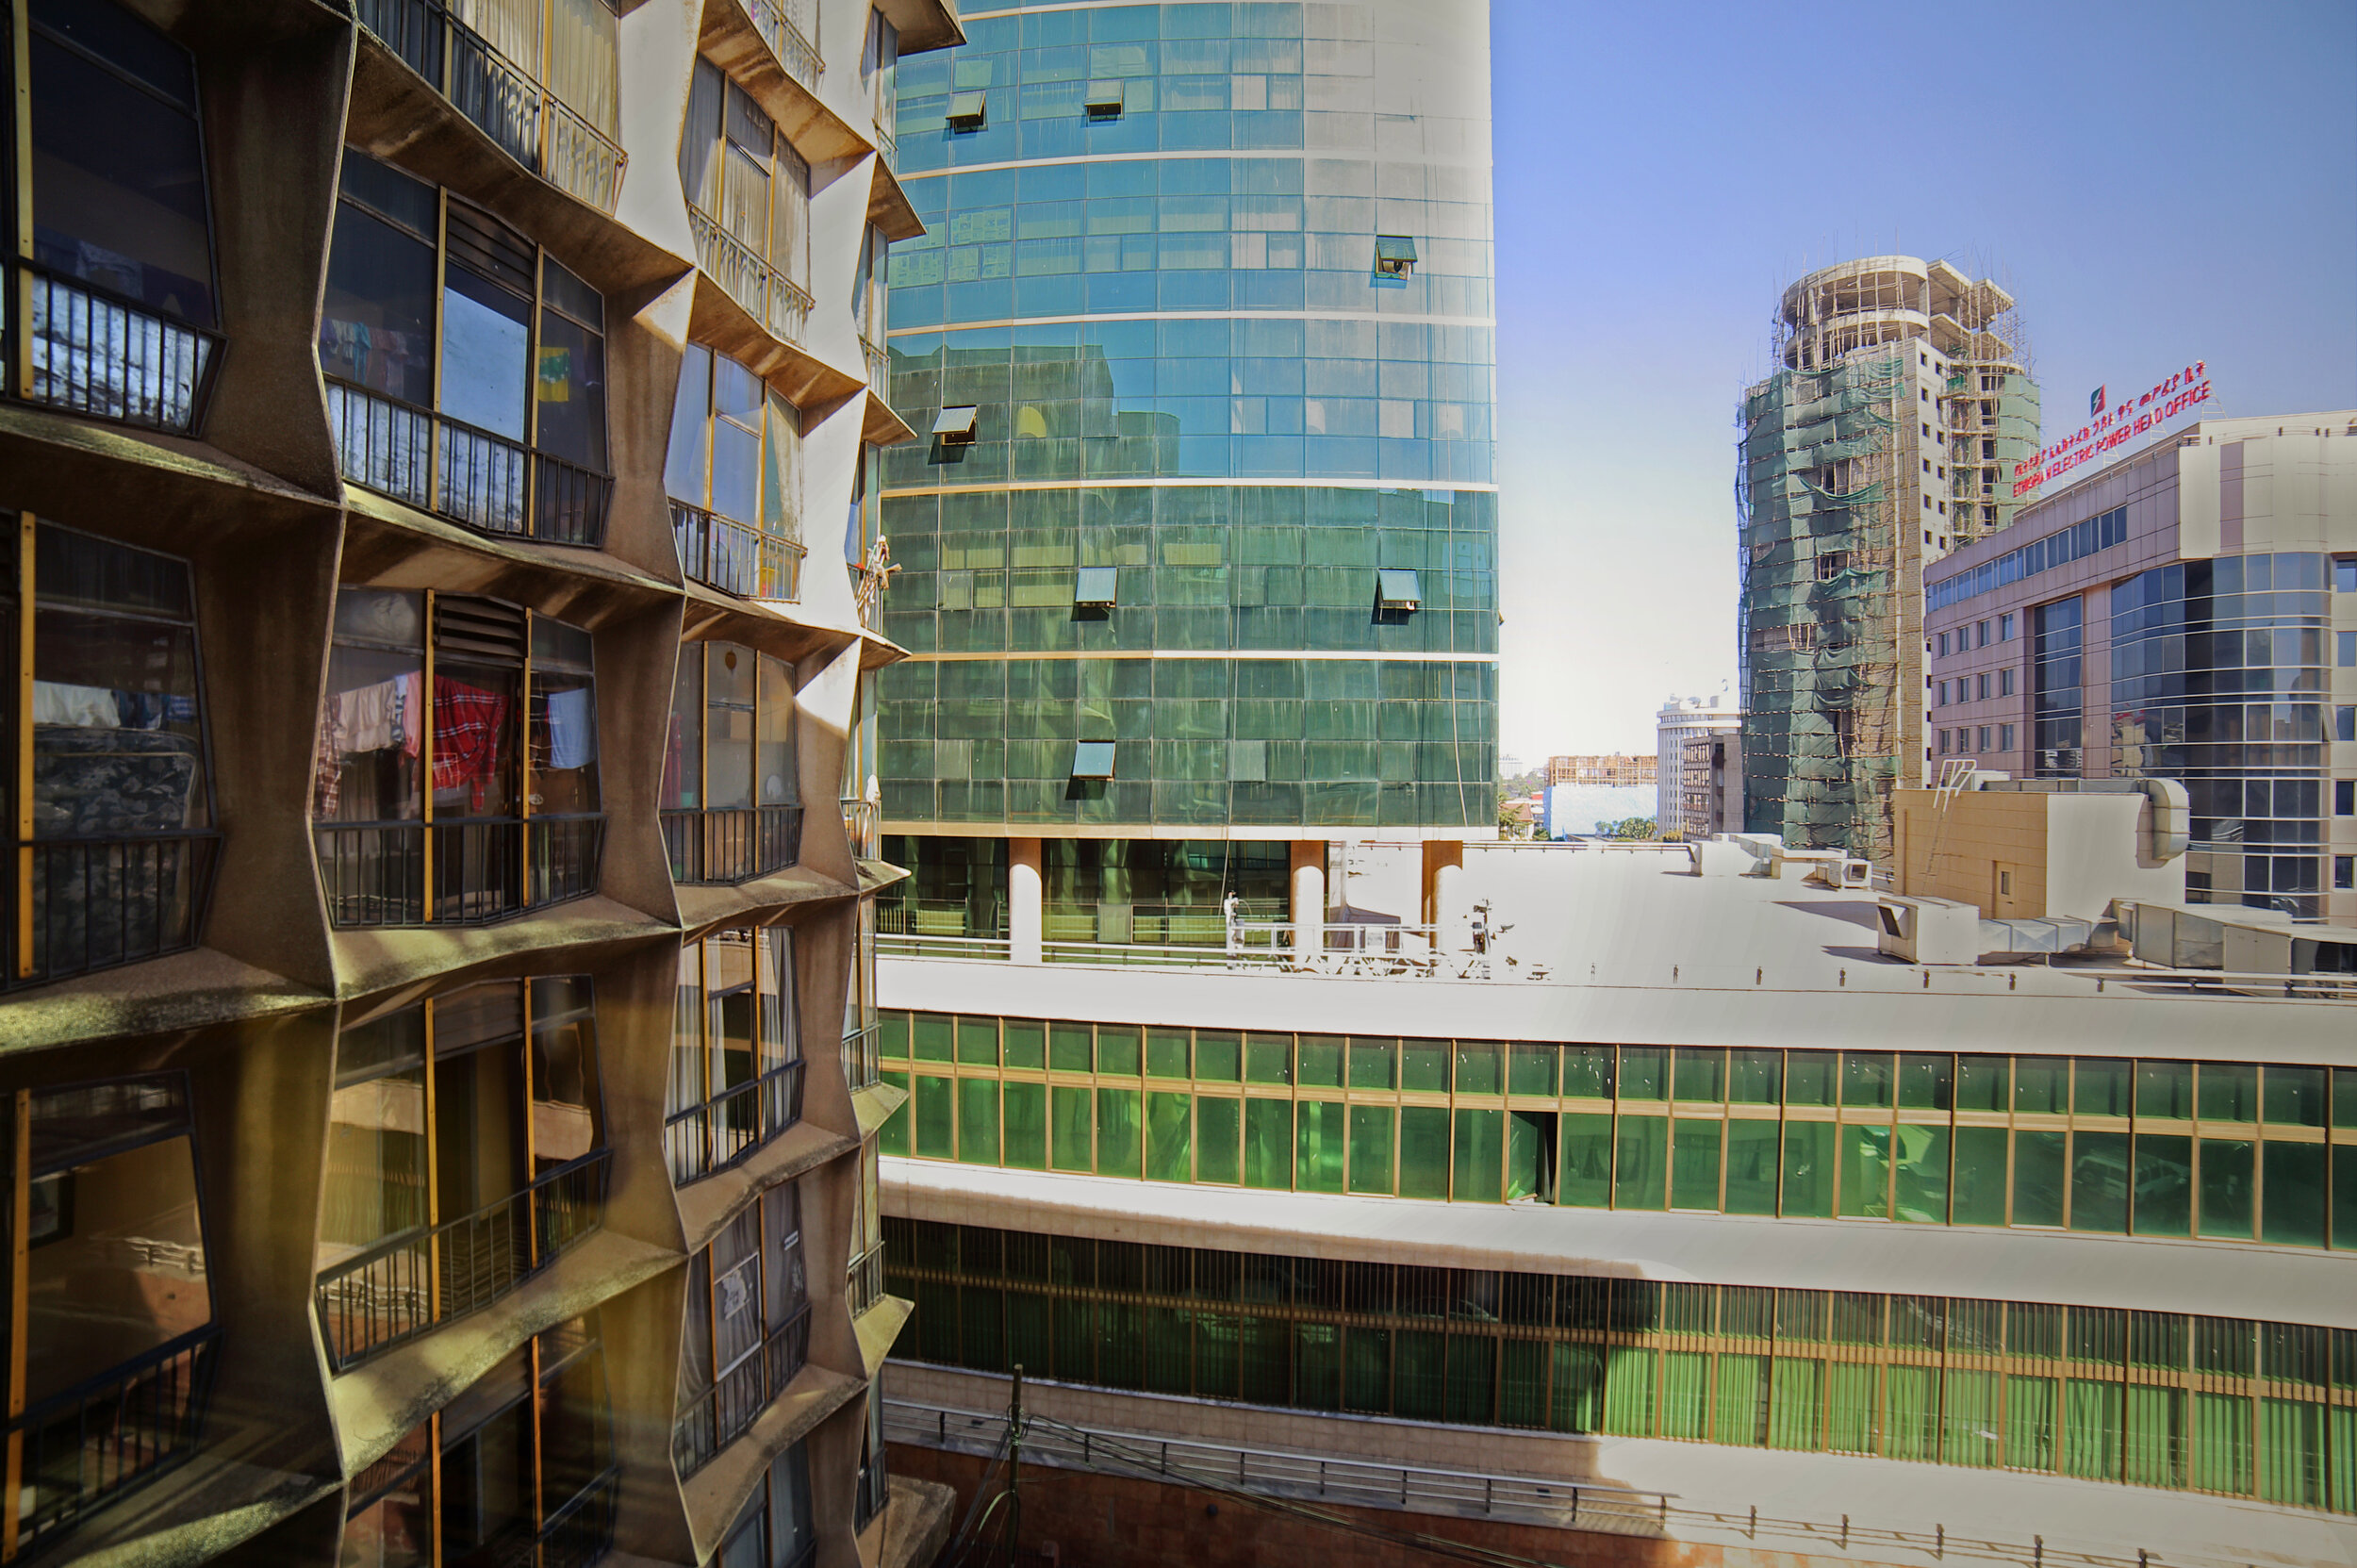  Stark contrast between the Bedilu Building and surrounding new constructions. 